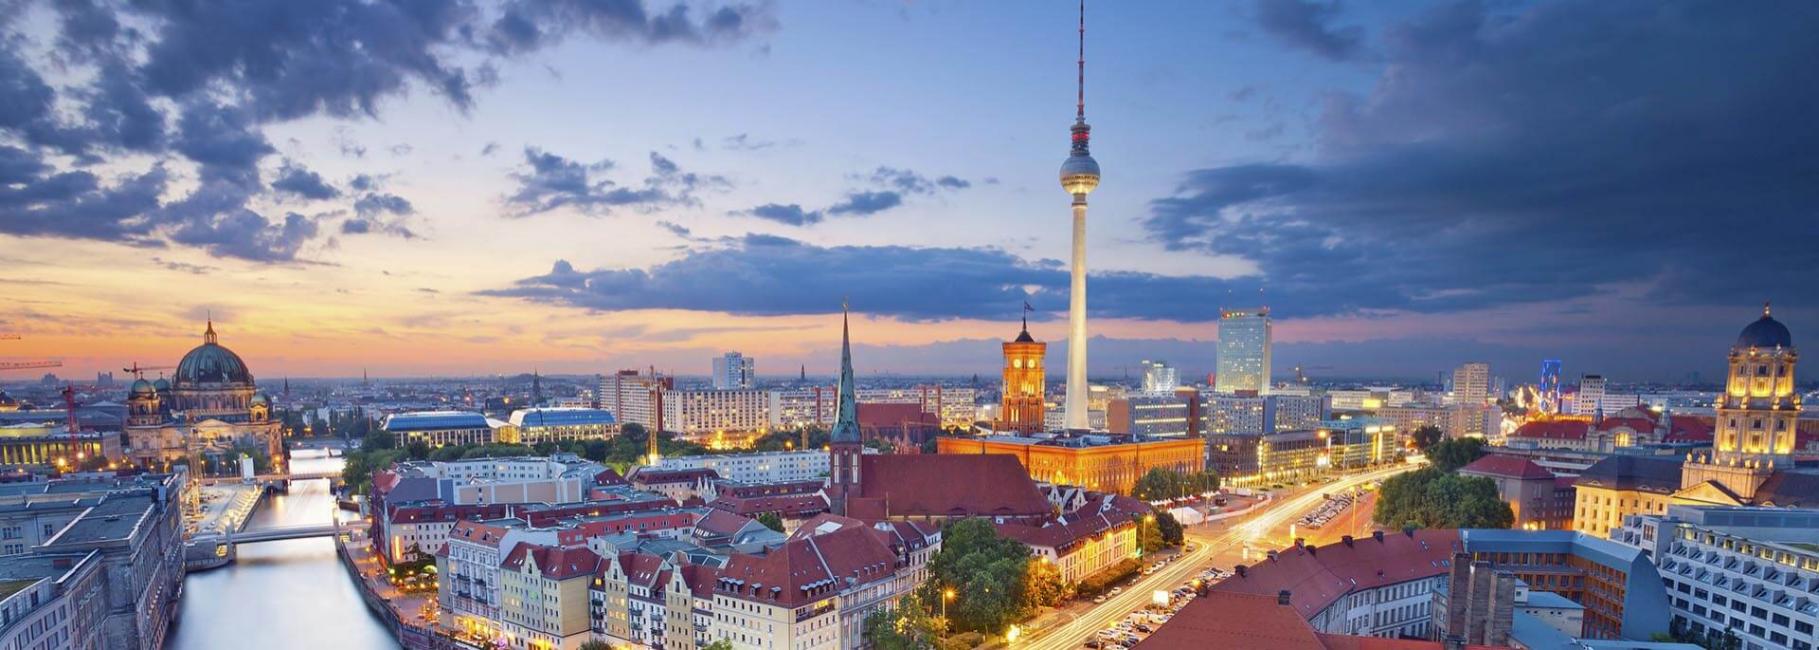 berlin sustainability trip header slk he